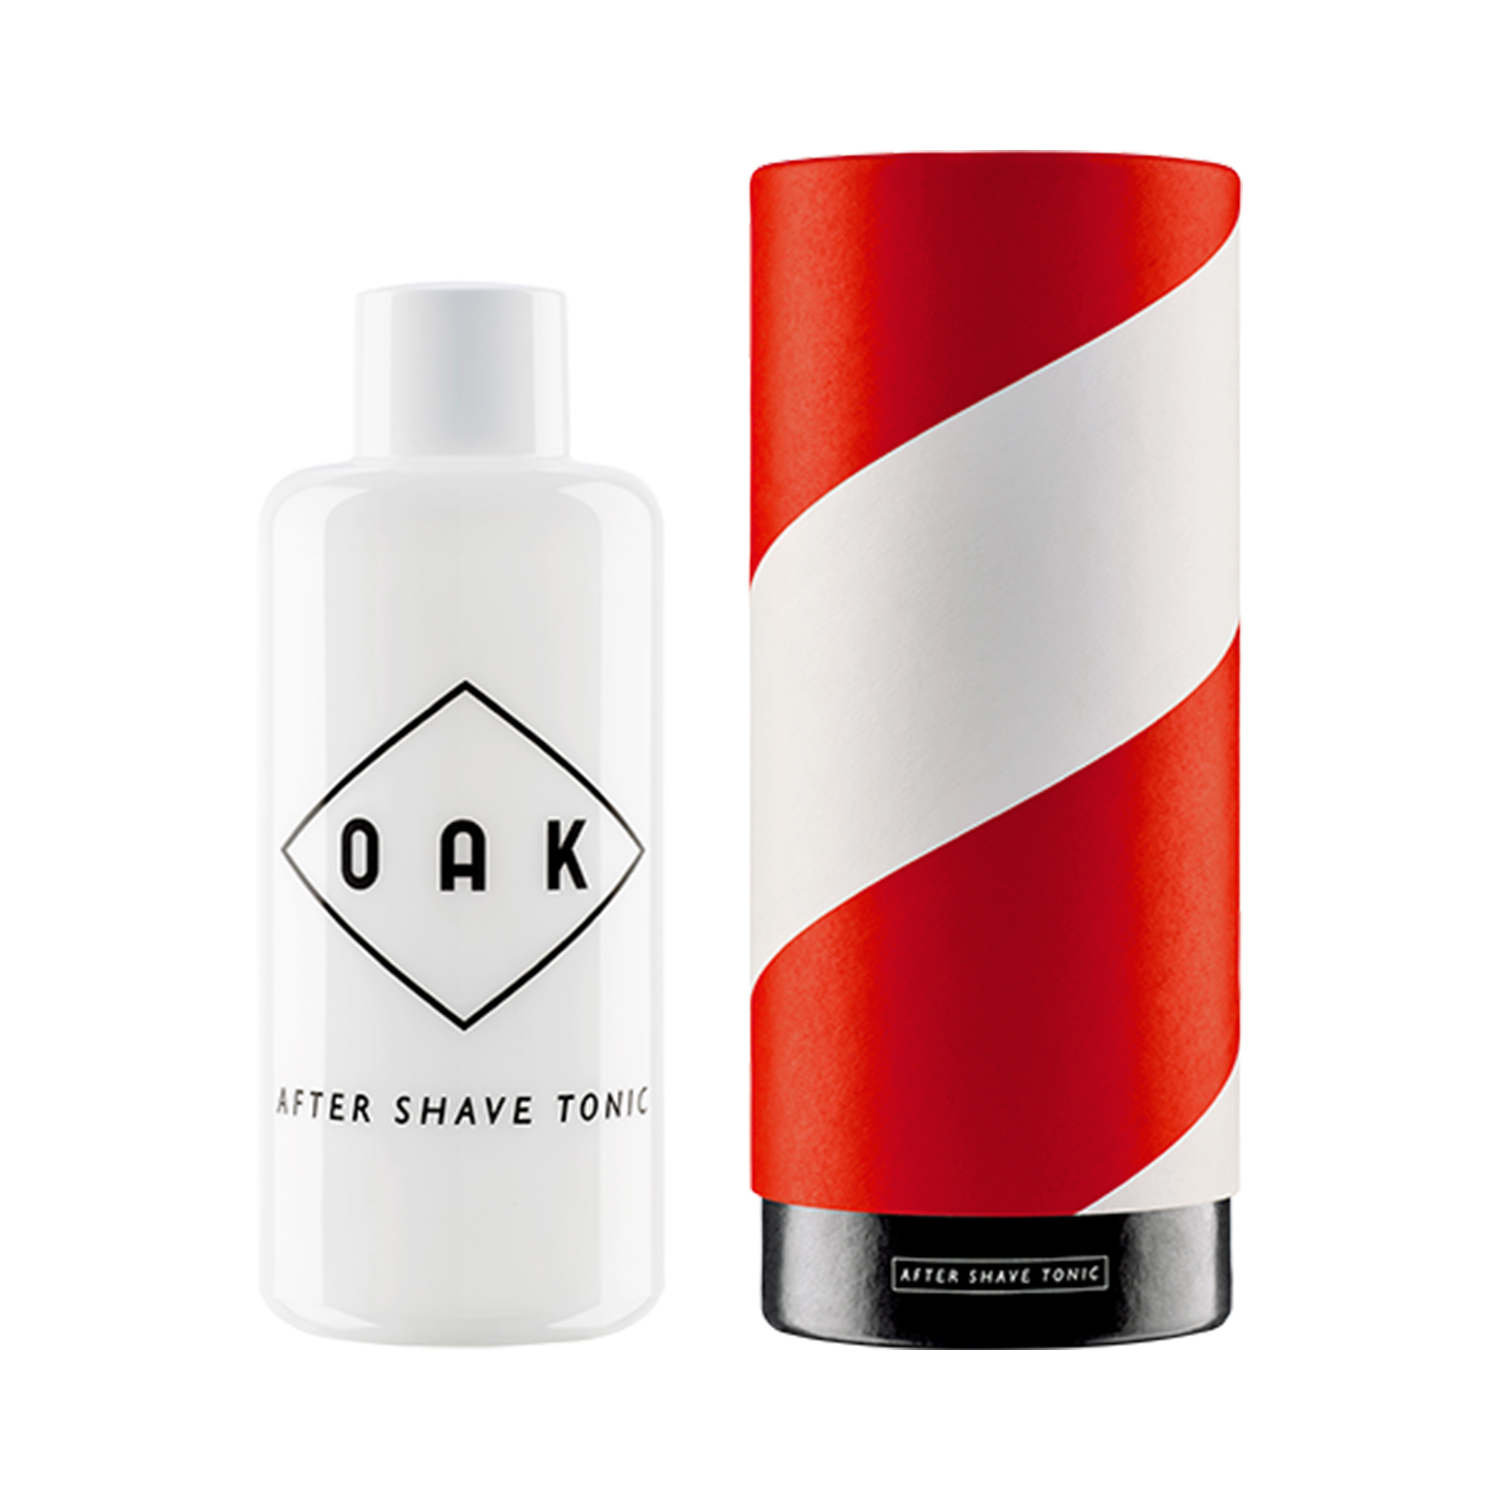 OAK - After Shave Tonic